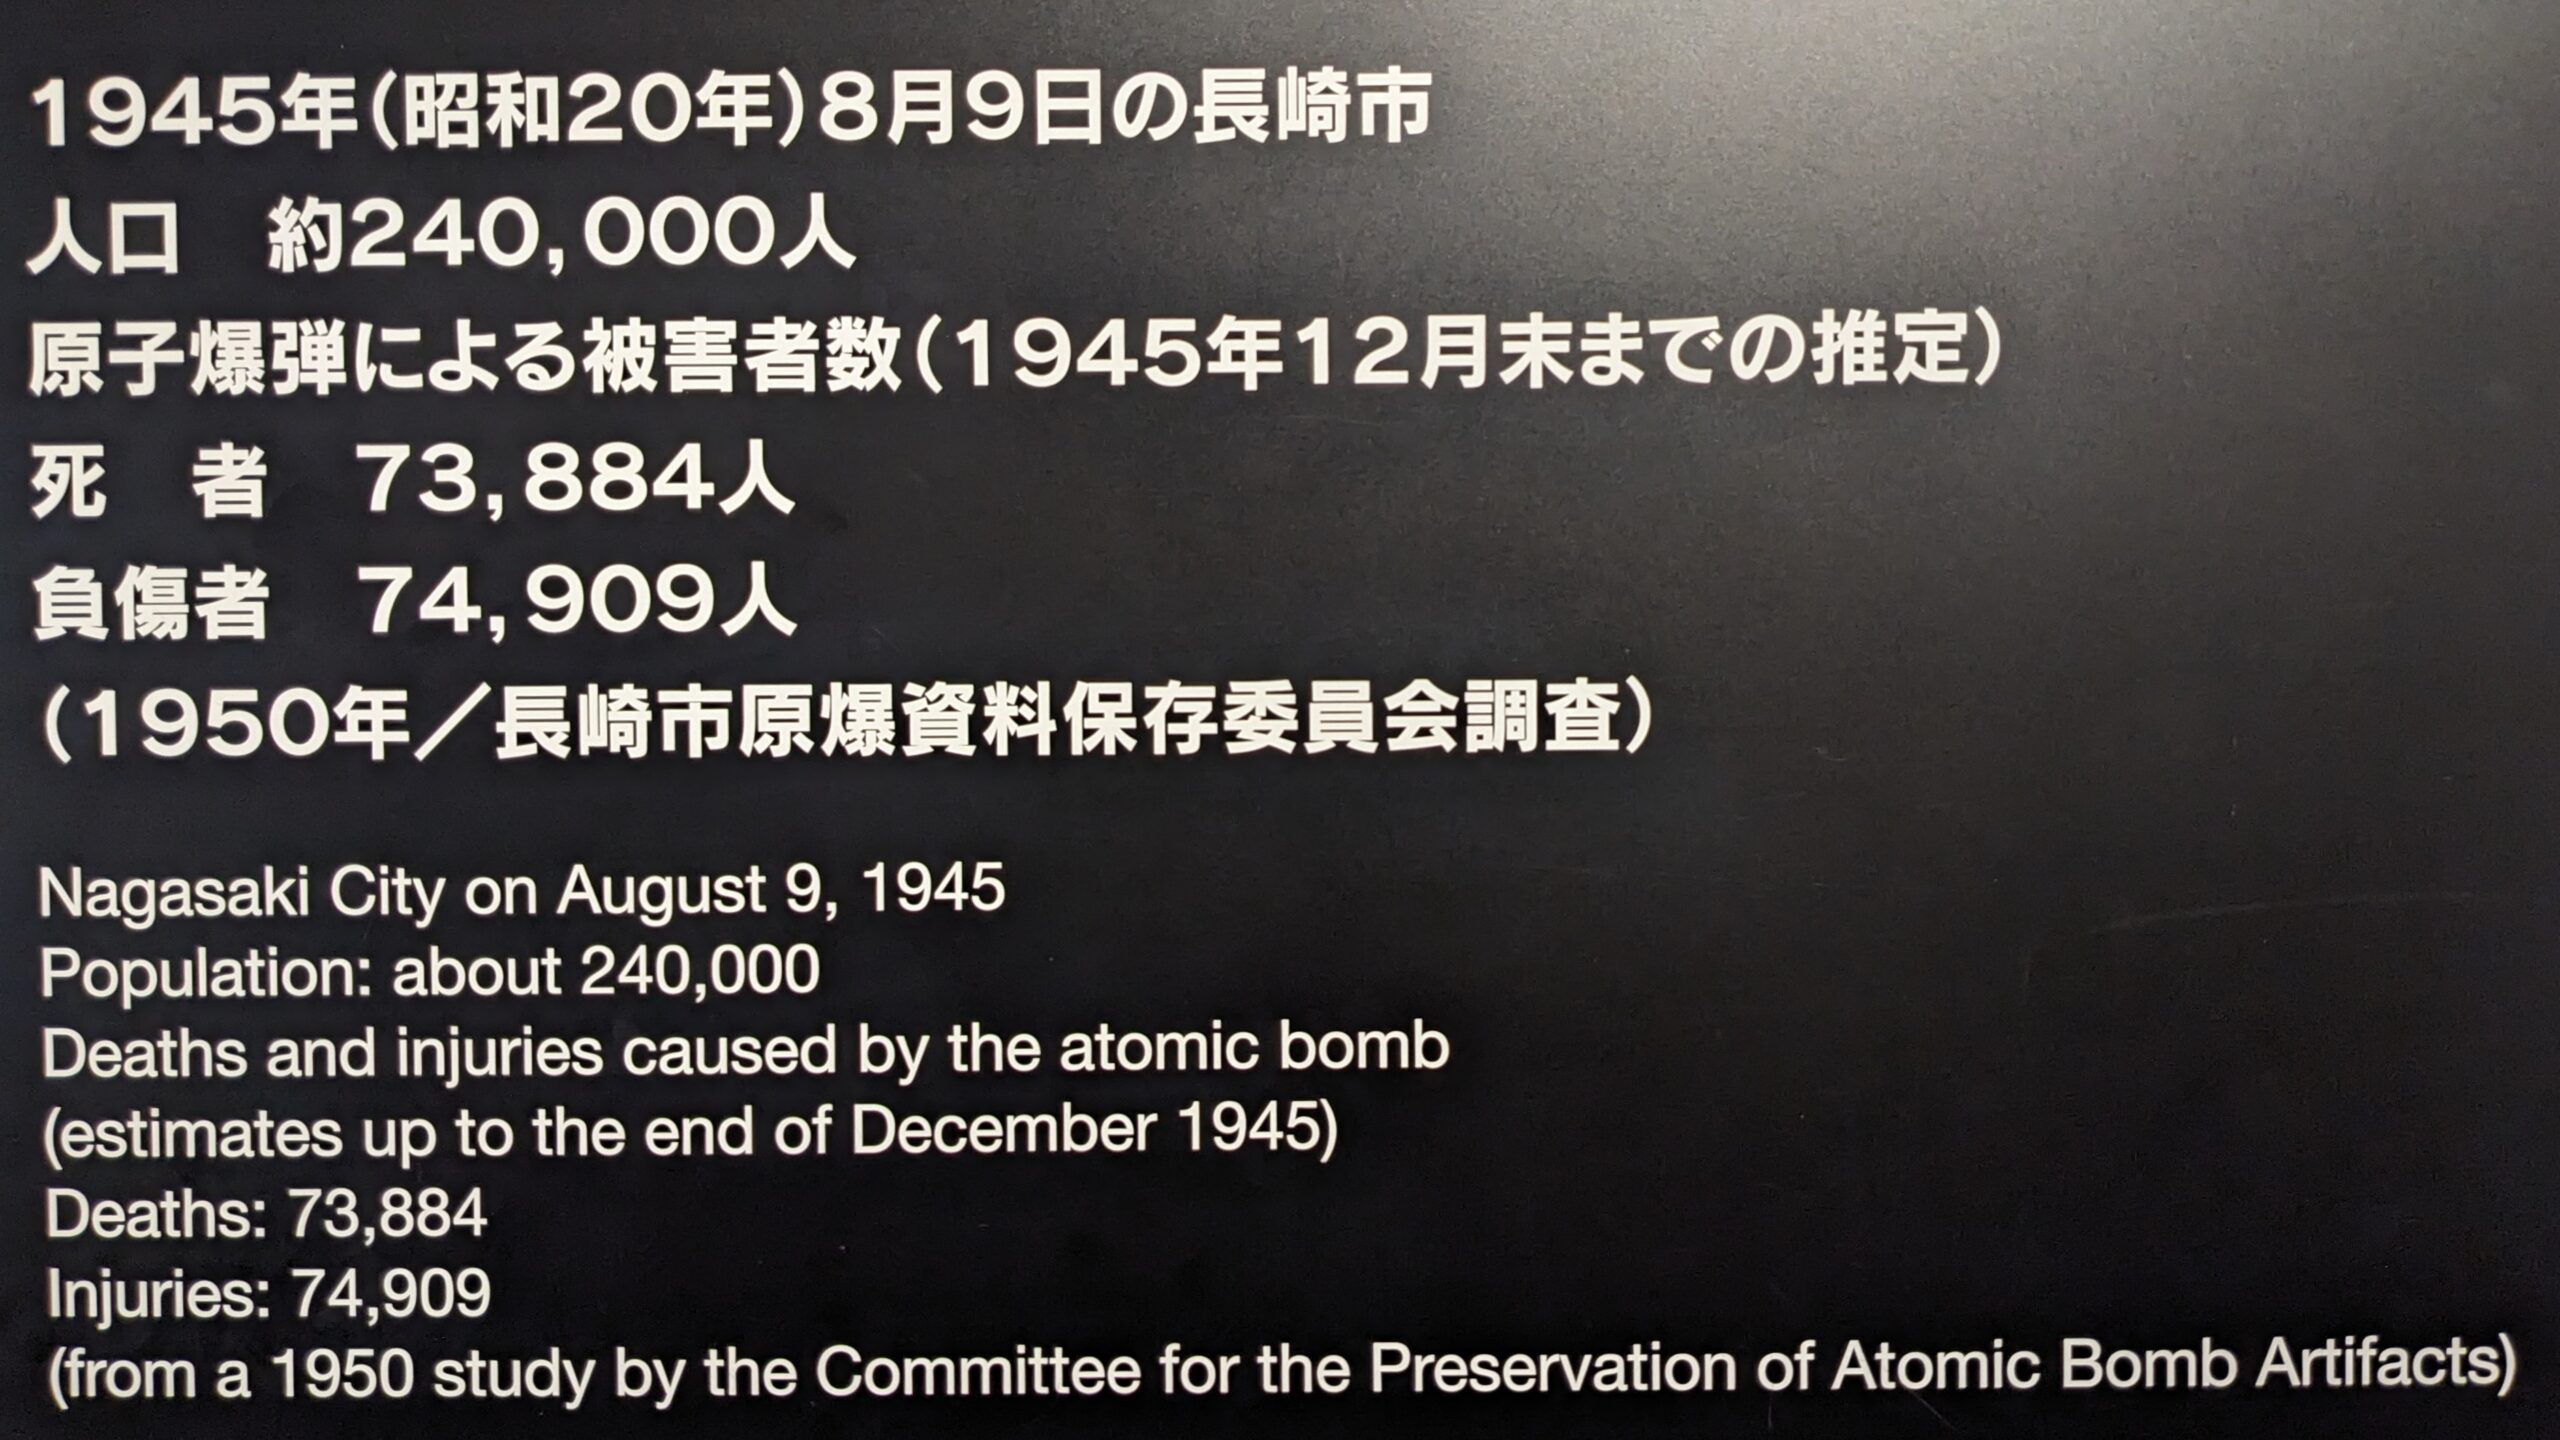 Atomic bomb statistics for Nagasaki